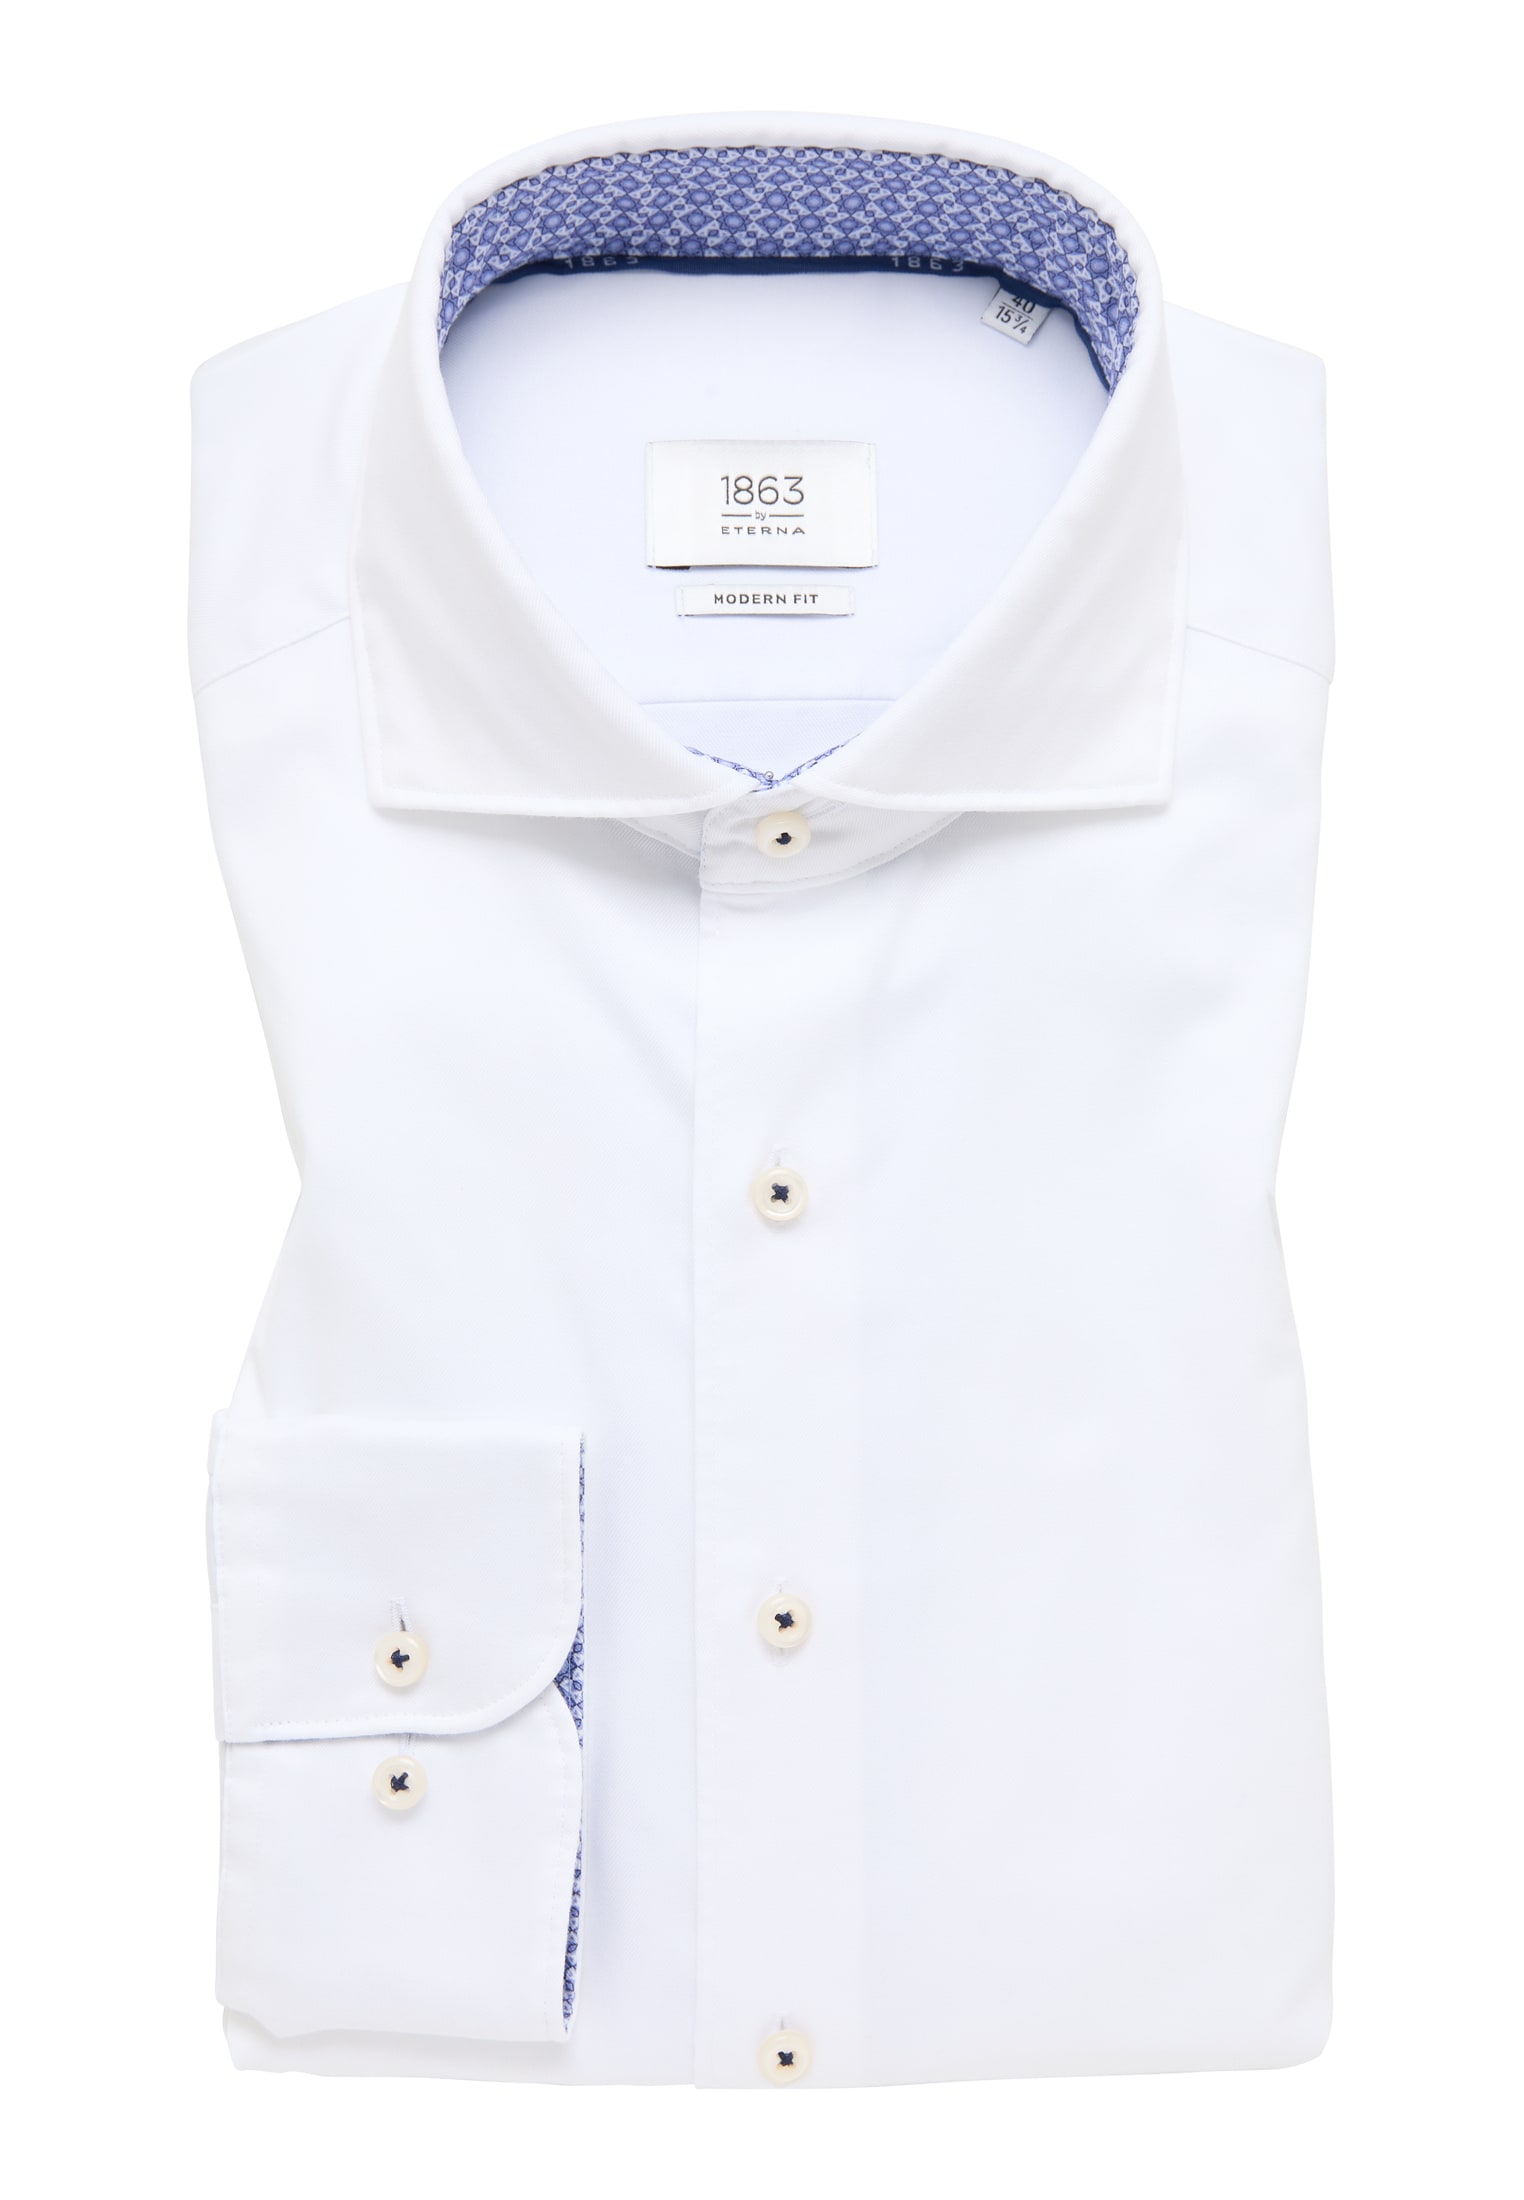 MODERN FIT Soft Luxury Shirt in off-white unifarben | off-white | 42 |  Langarm | 1SH11519-00-02-42-1/1